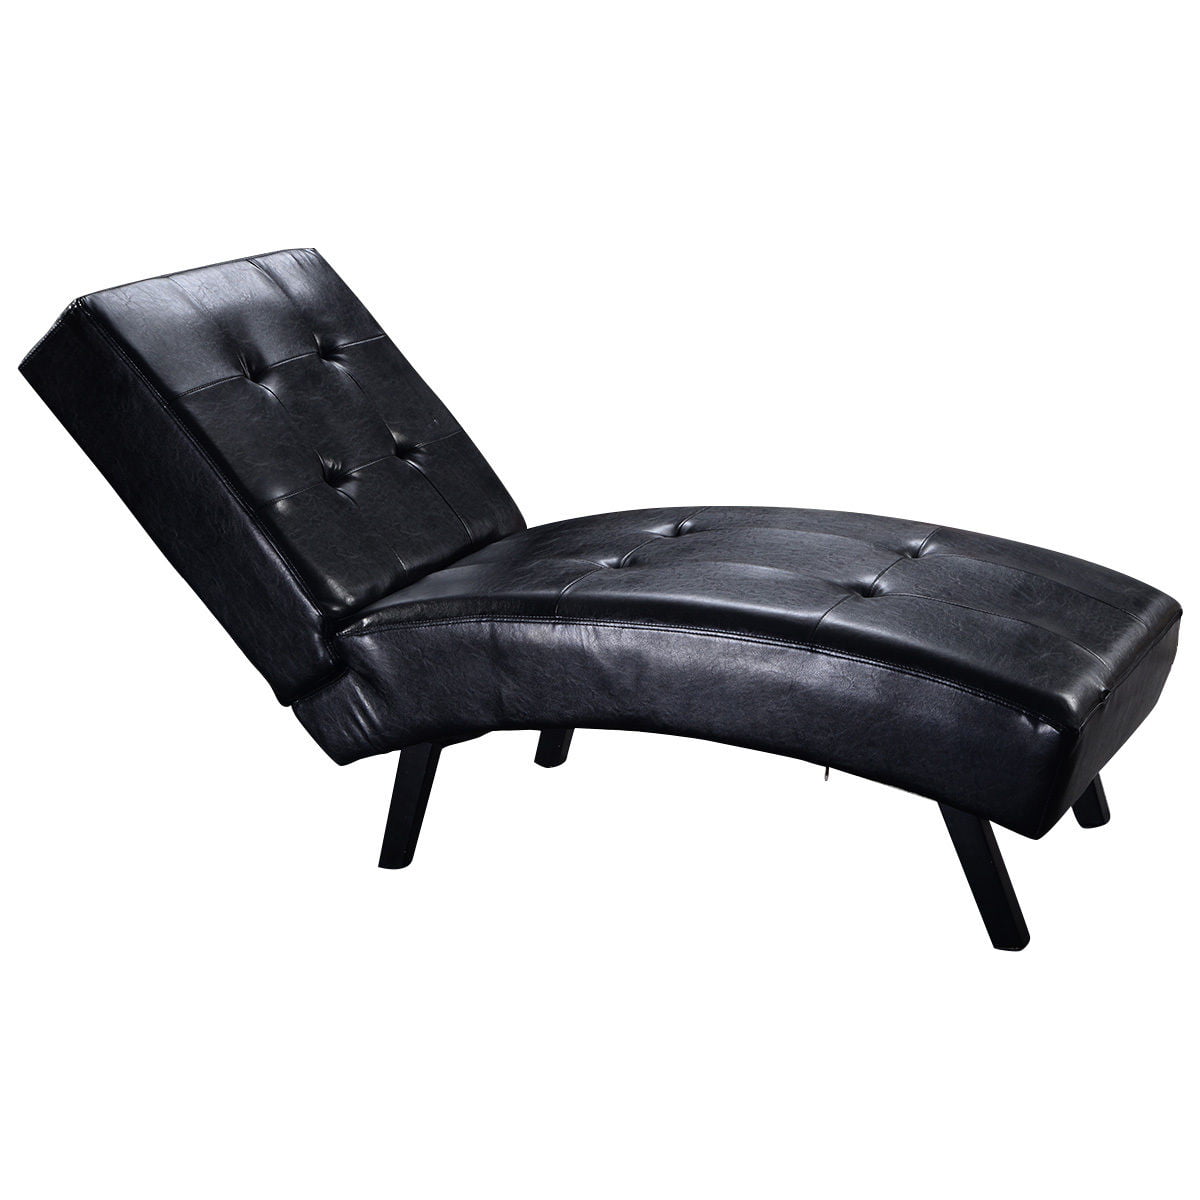 Goplus Modern Chaise Lounge Leather Chair Armless